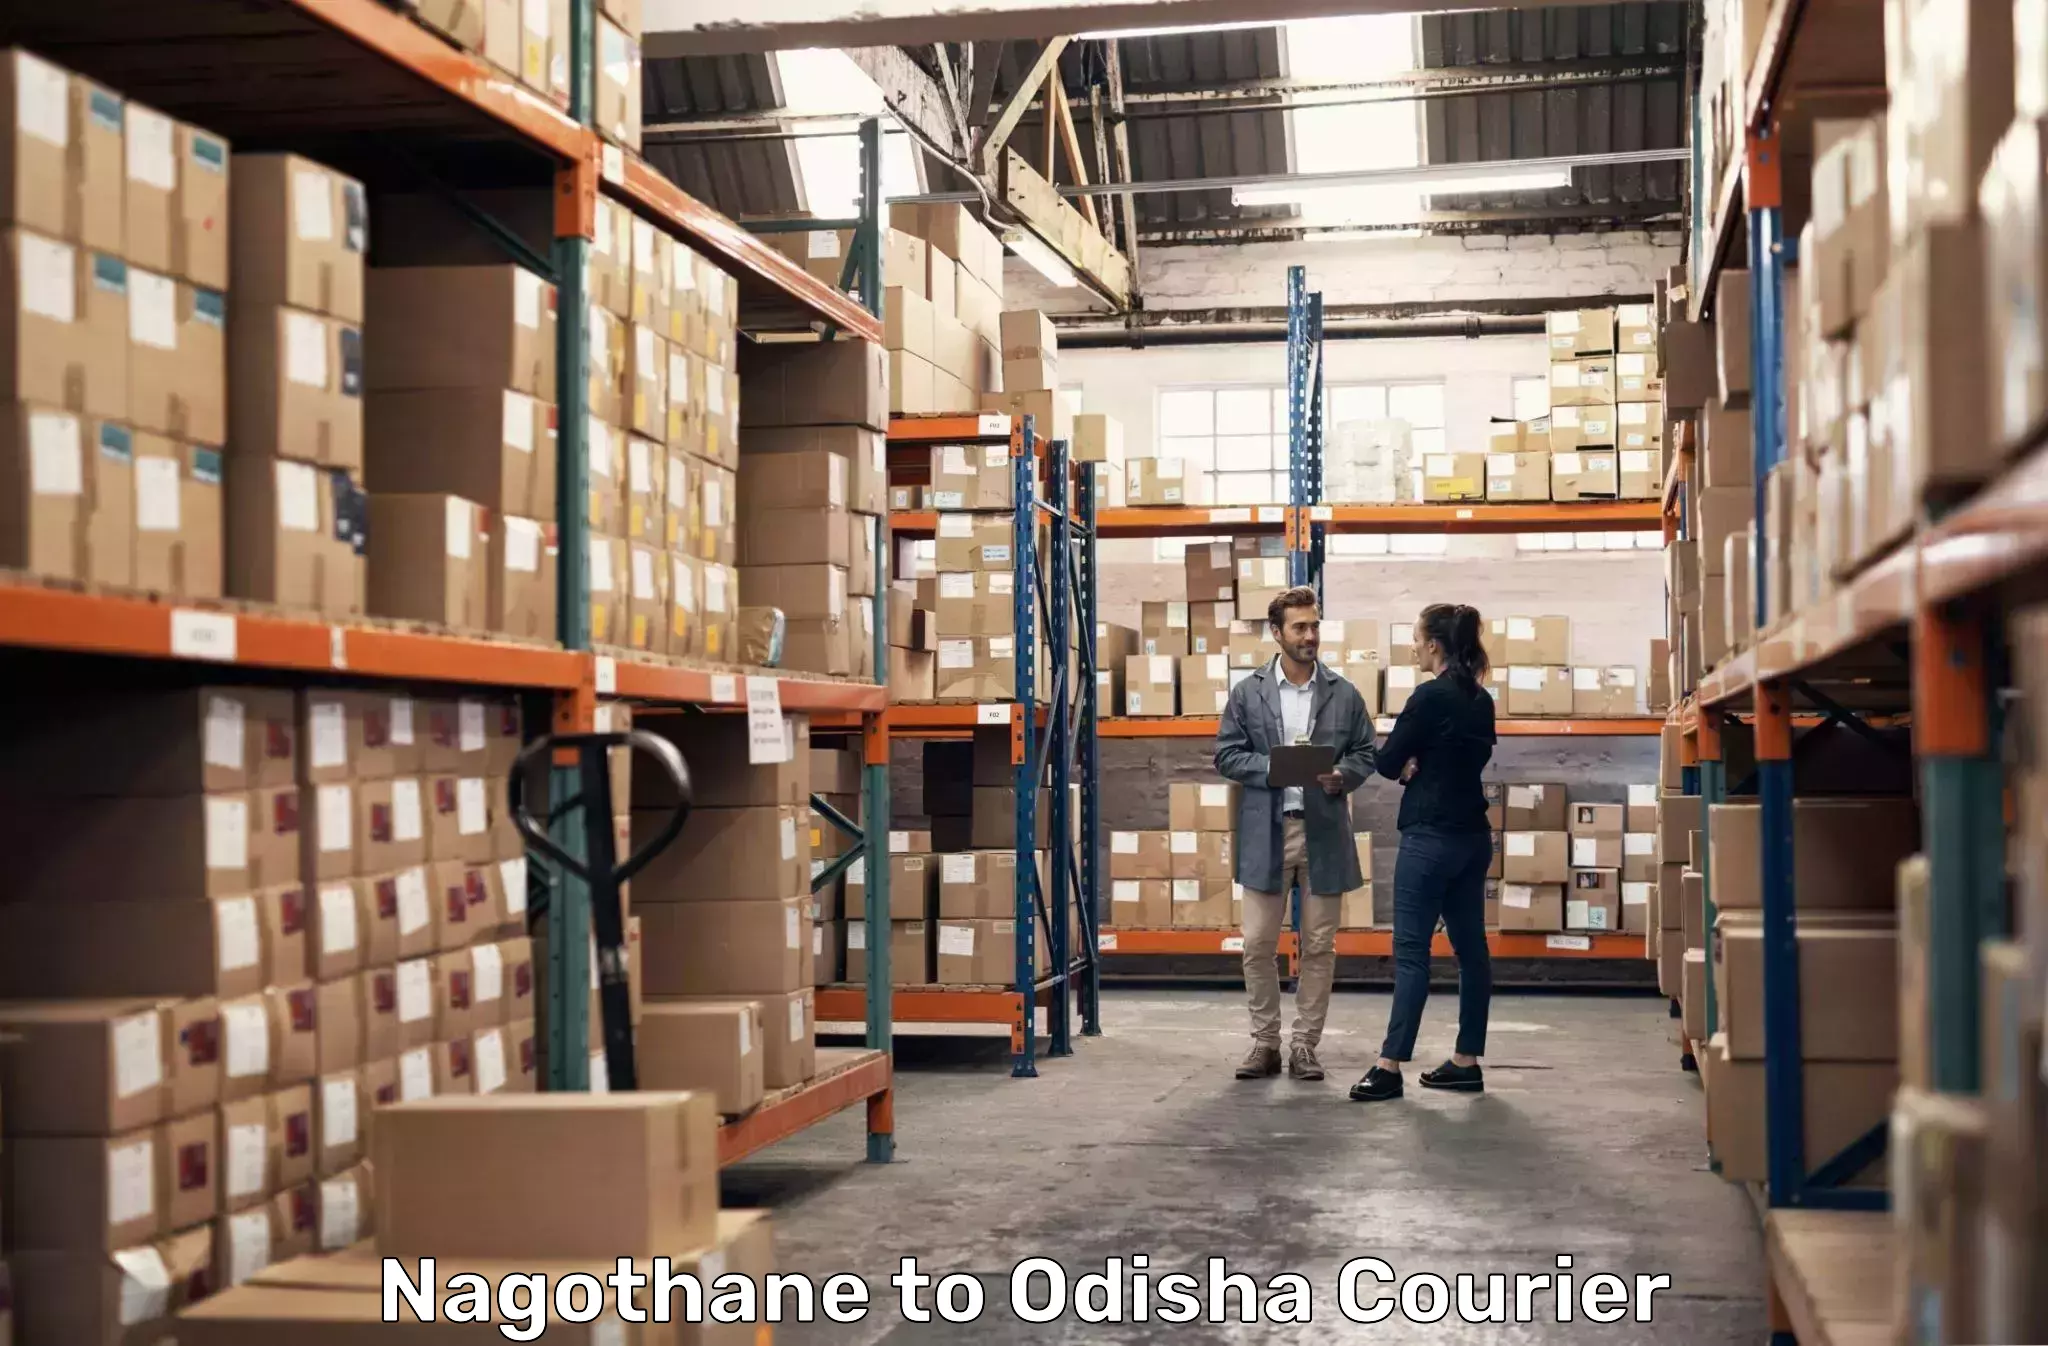 Courier service comparison Nagothane to Odisha